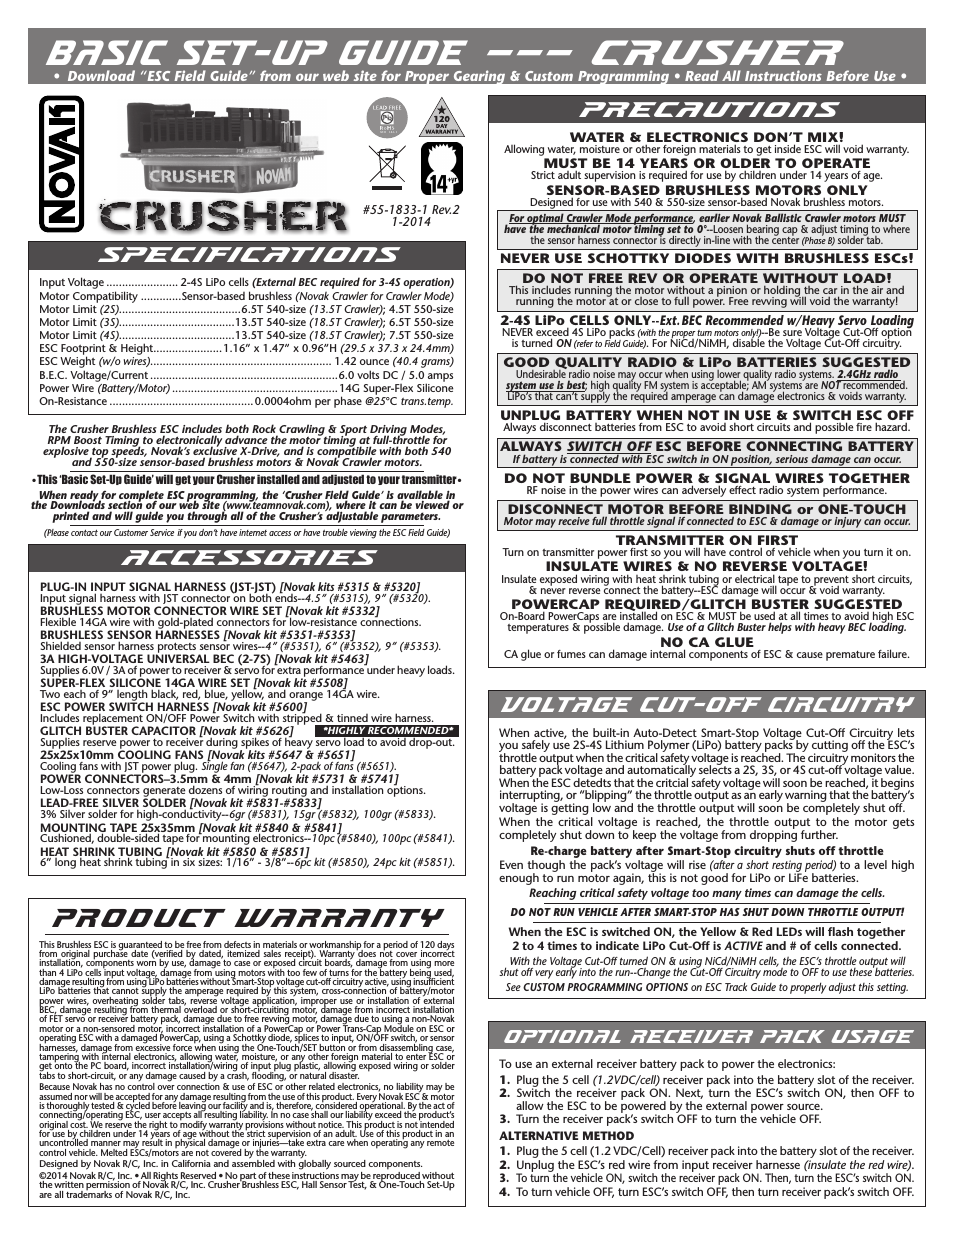 Brushless Speed Control: Crusher Basic Set-Up (original) (55-1833-1 Rev.2)